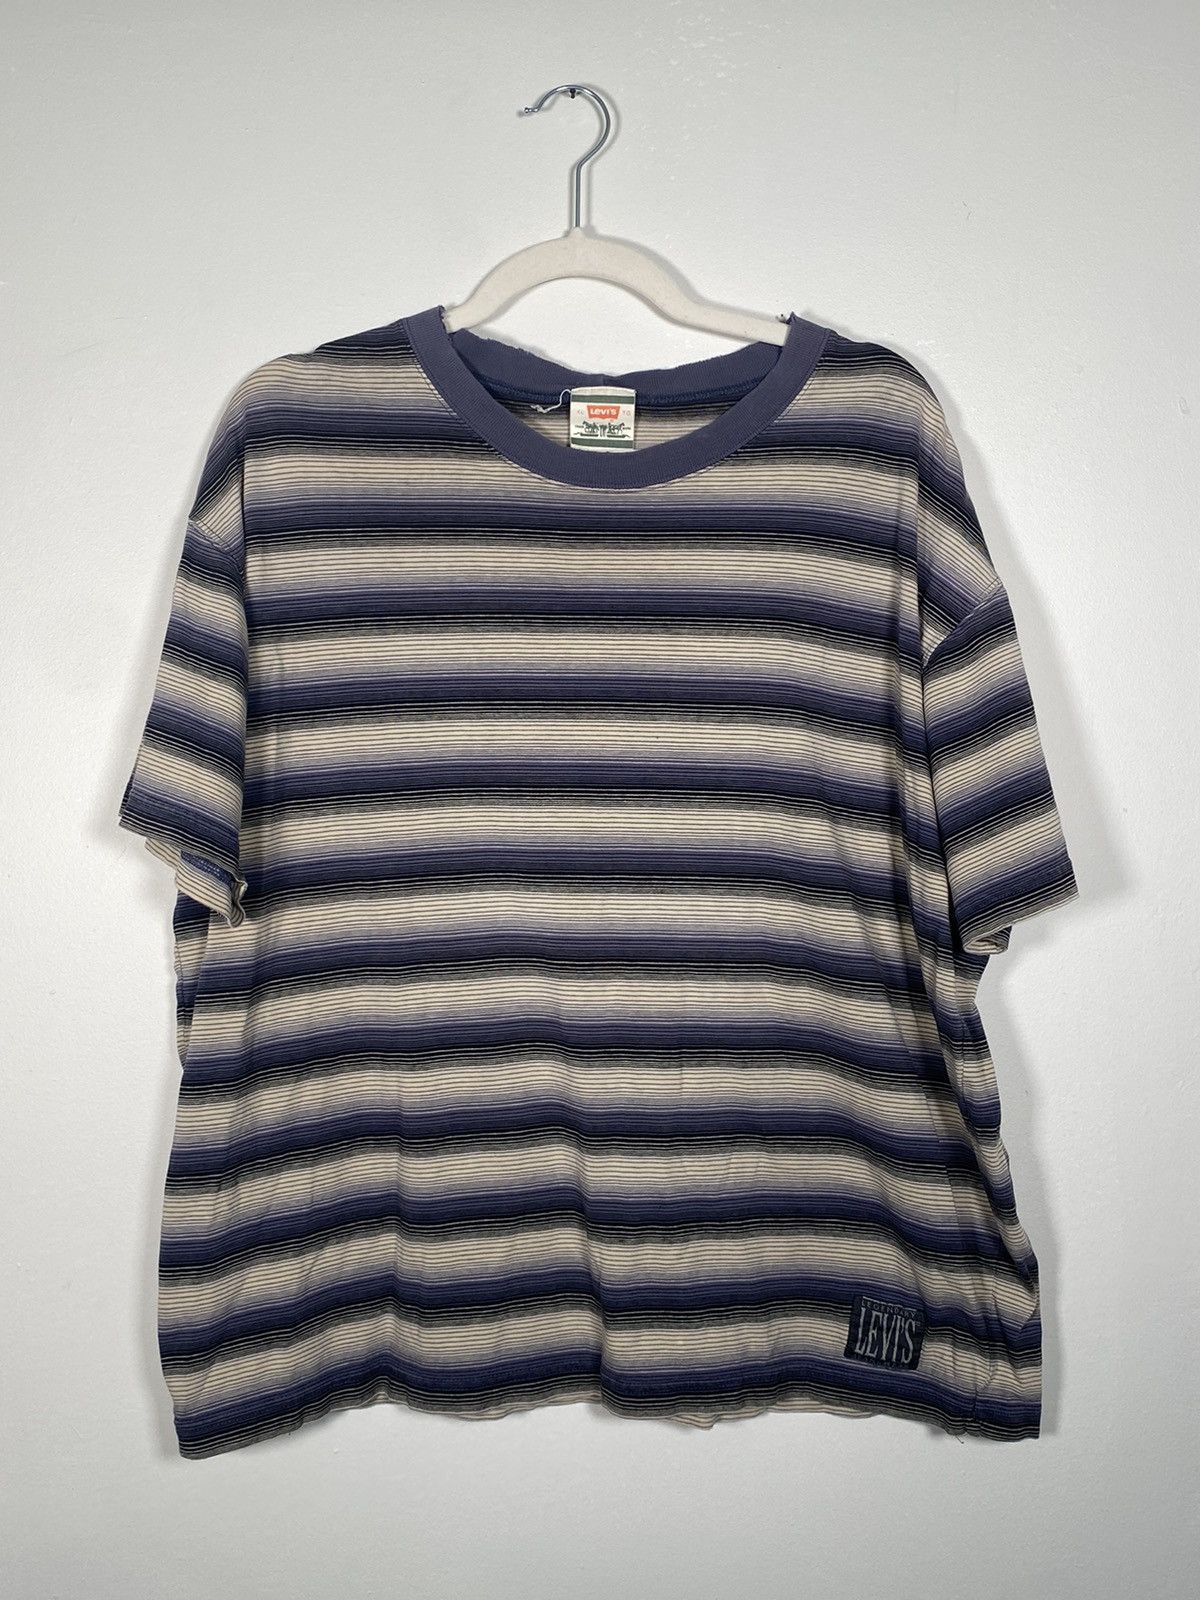 Vintage Striped T-Shirt Size US L / EU 52-54 / 3 - 1 Preview